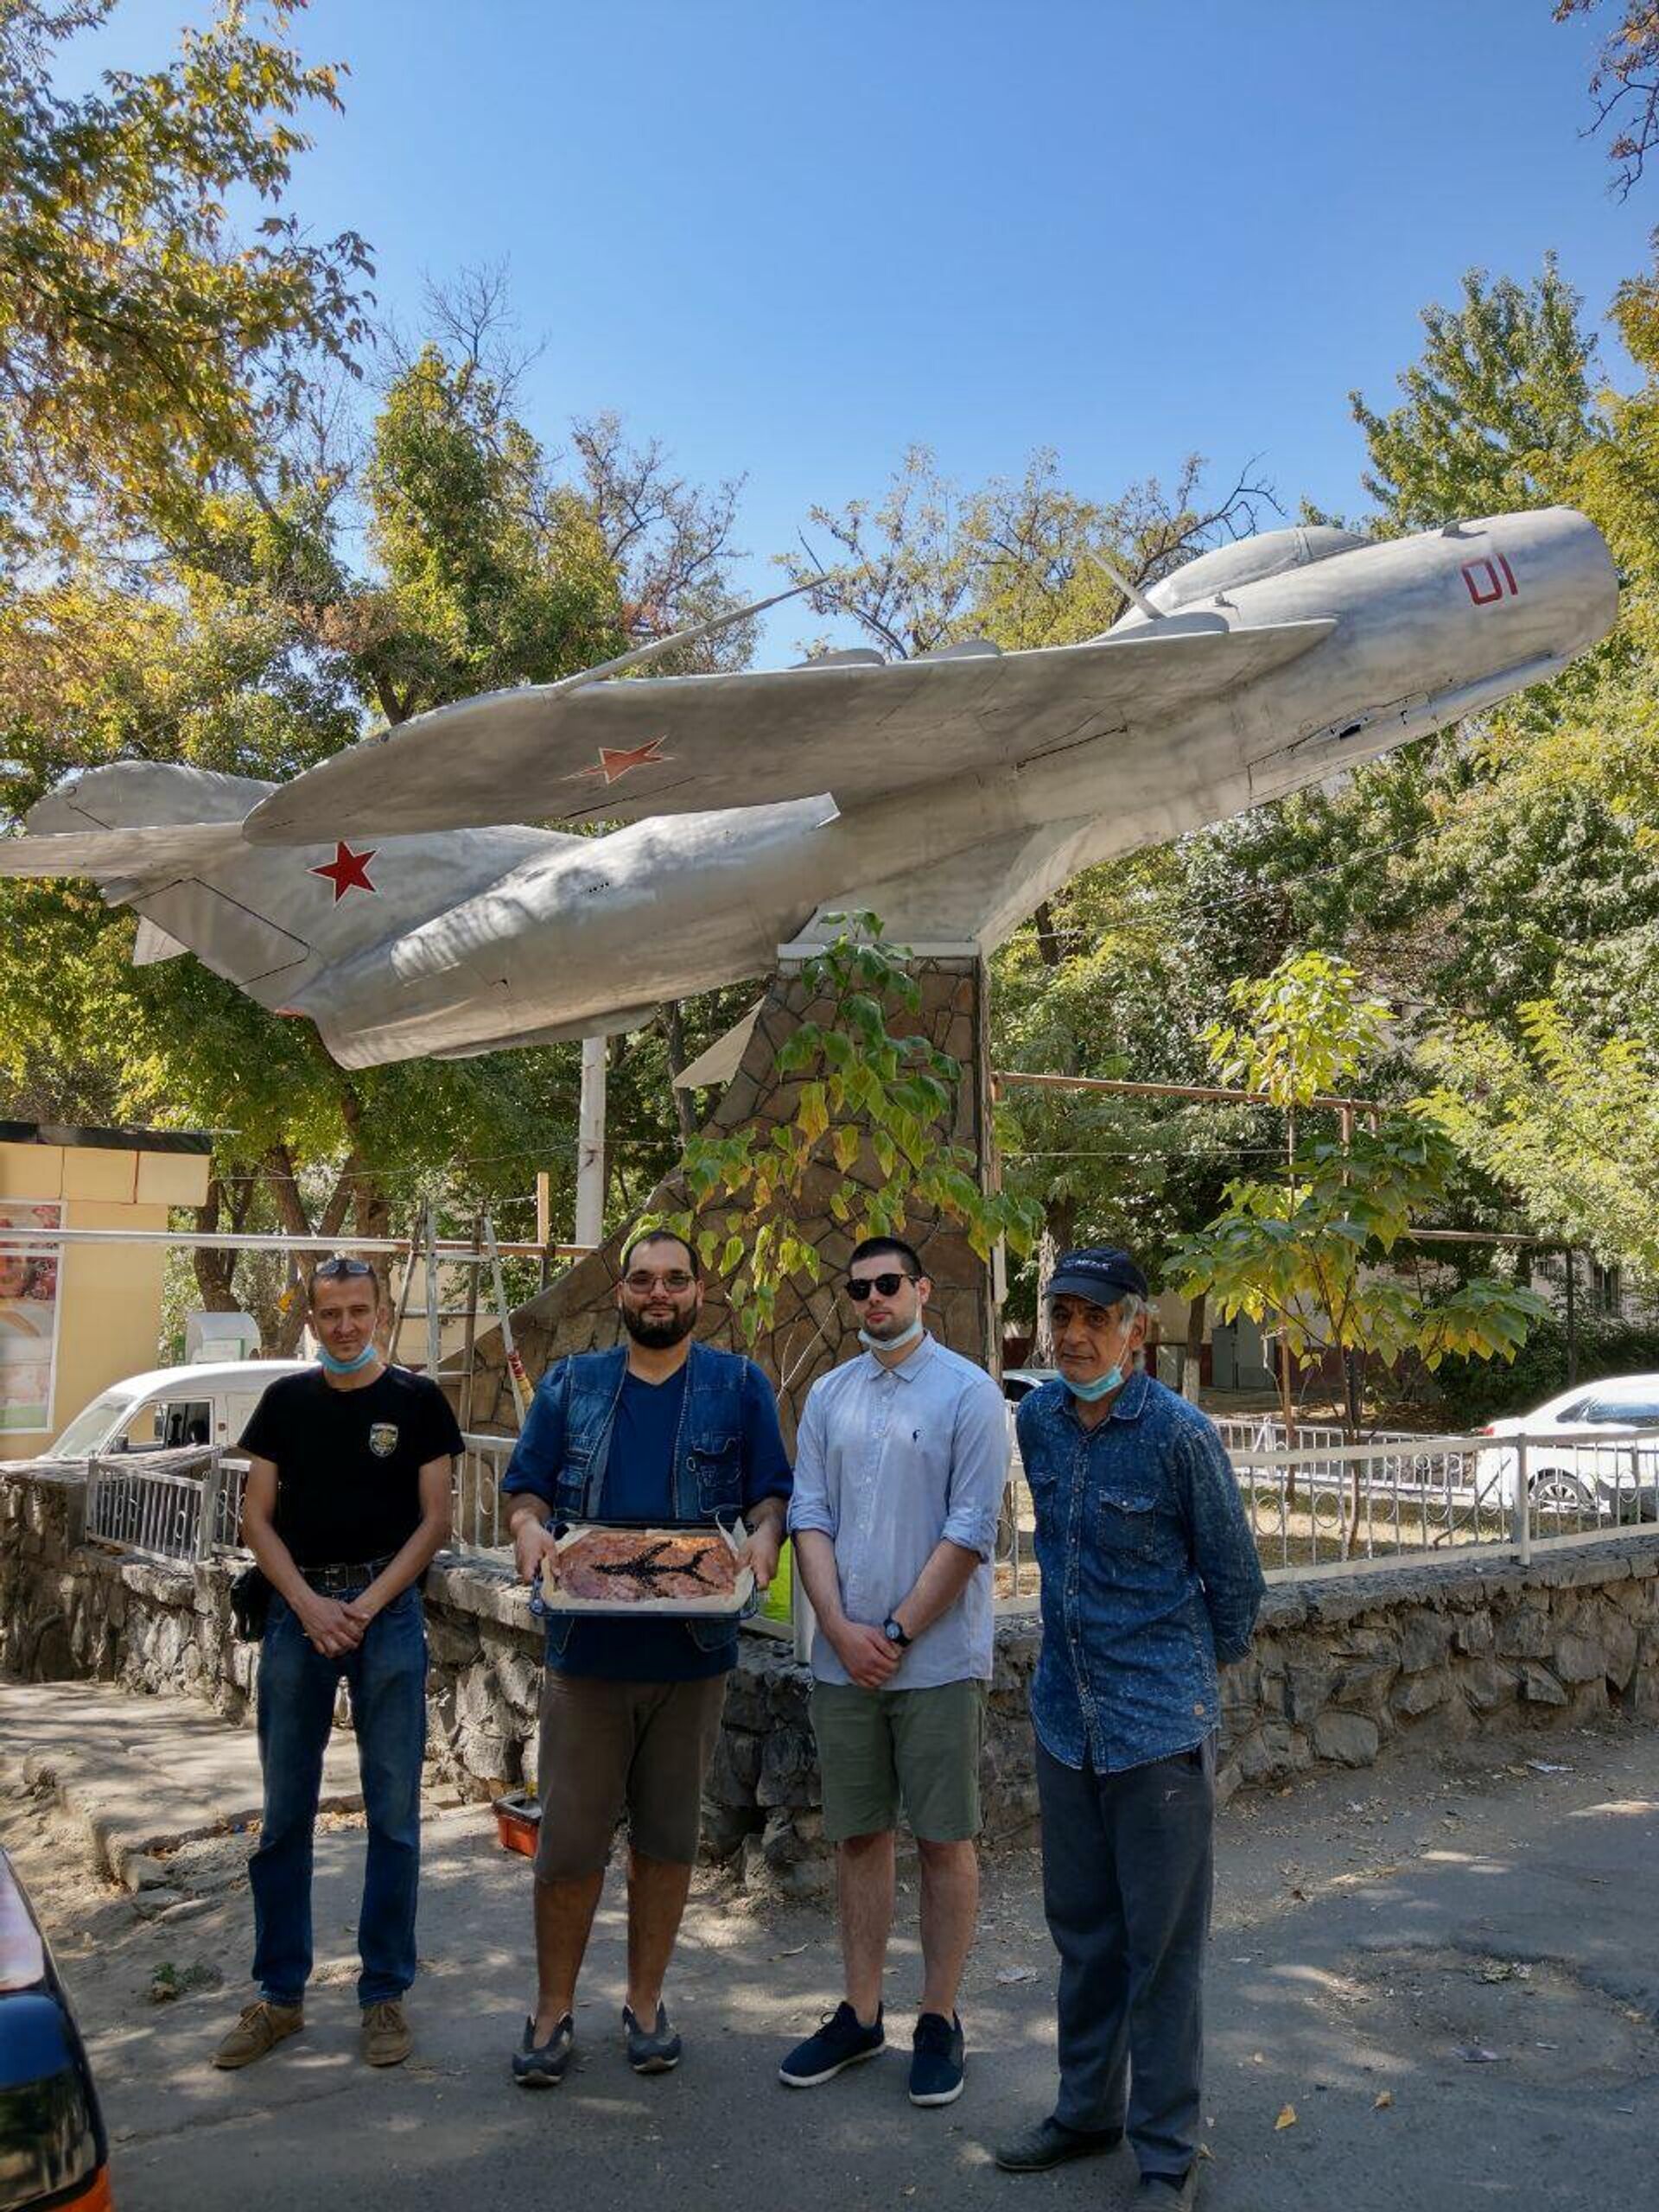 Авиаволонтеры восстанавливают МиГ-17 в Ташкенте - Sputnik Узбекистан, 1920, 04.10.2021